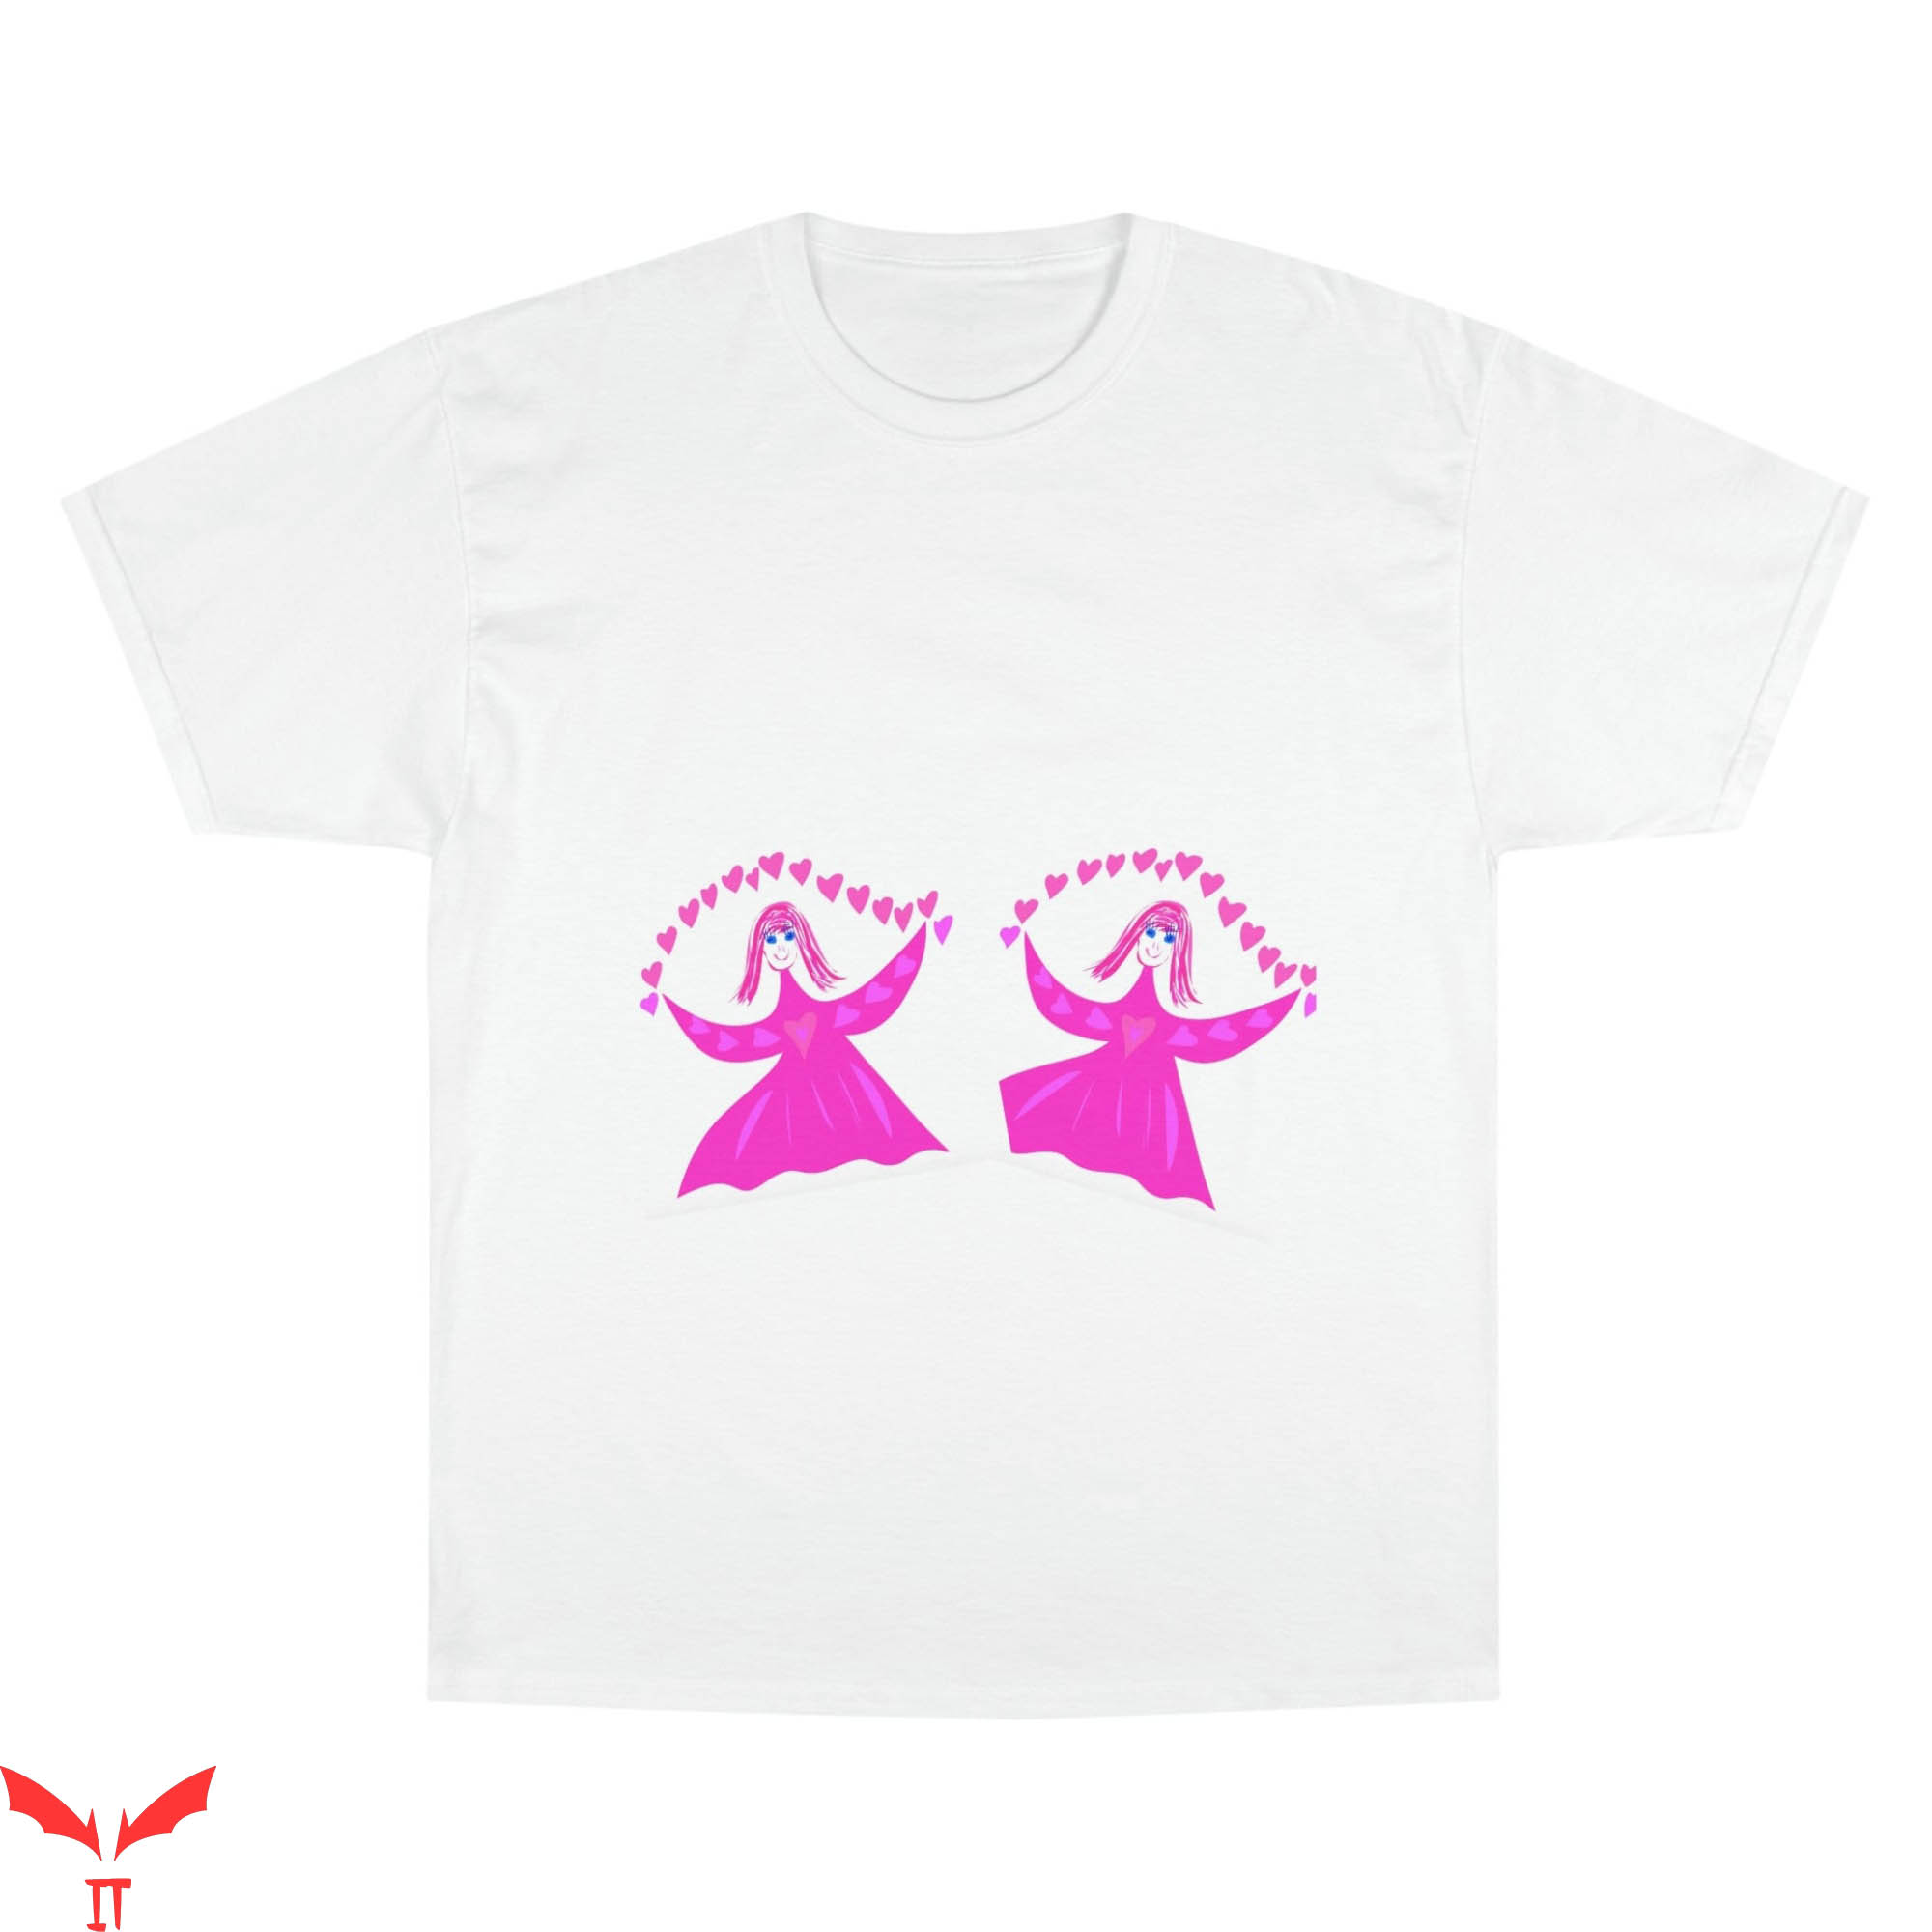 Champion Vintage T-Shirt Cute Two Pink Dolls Tee Shirt